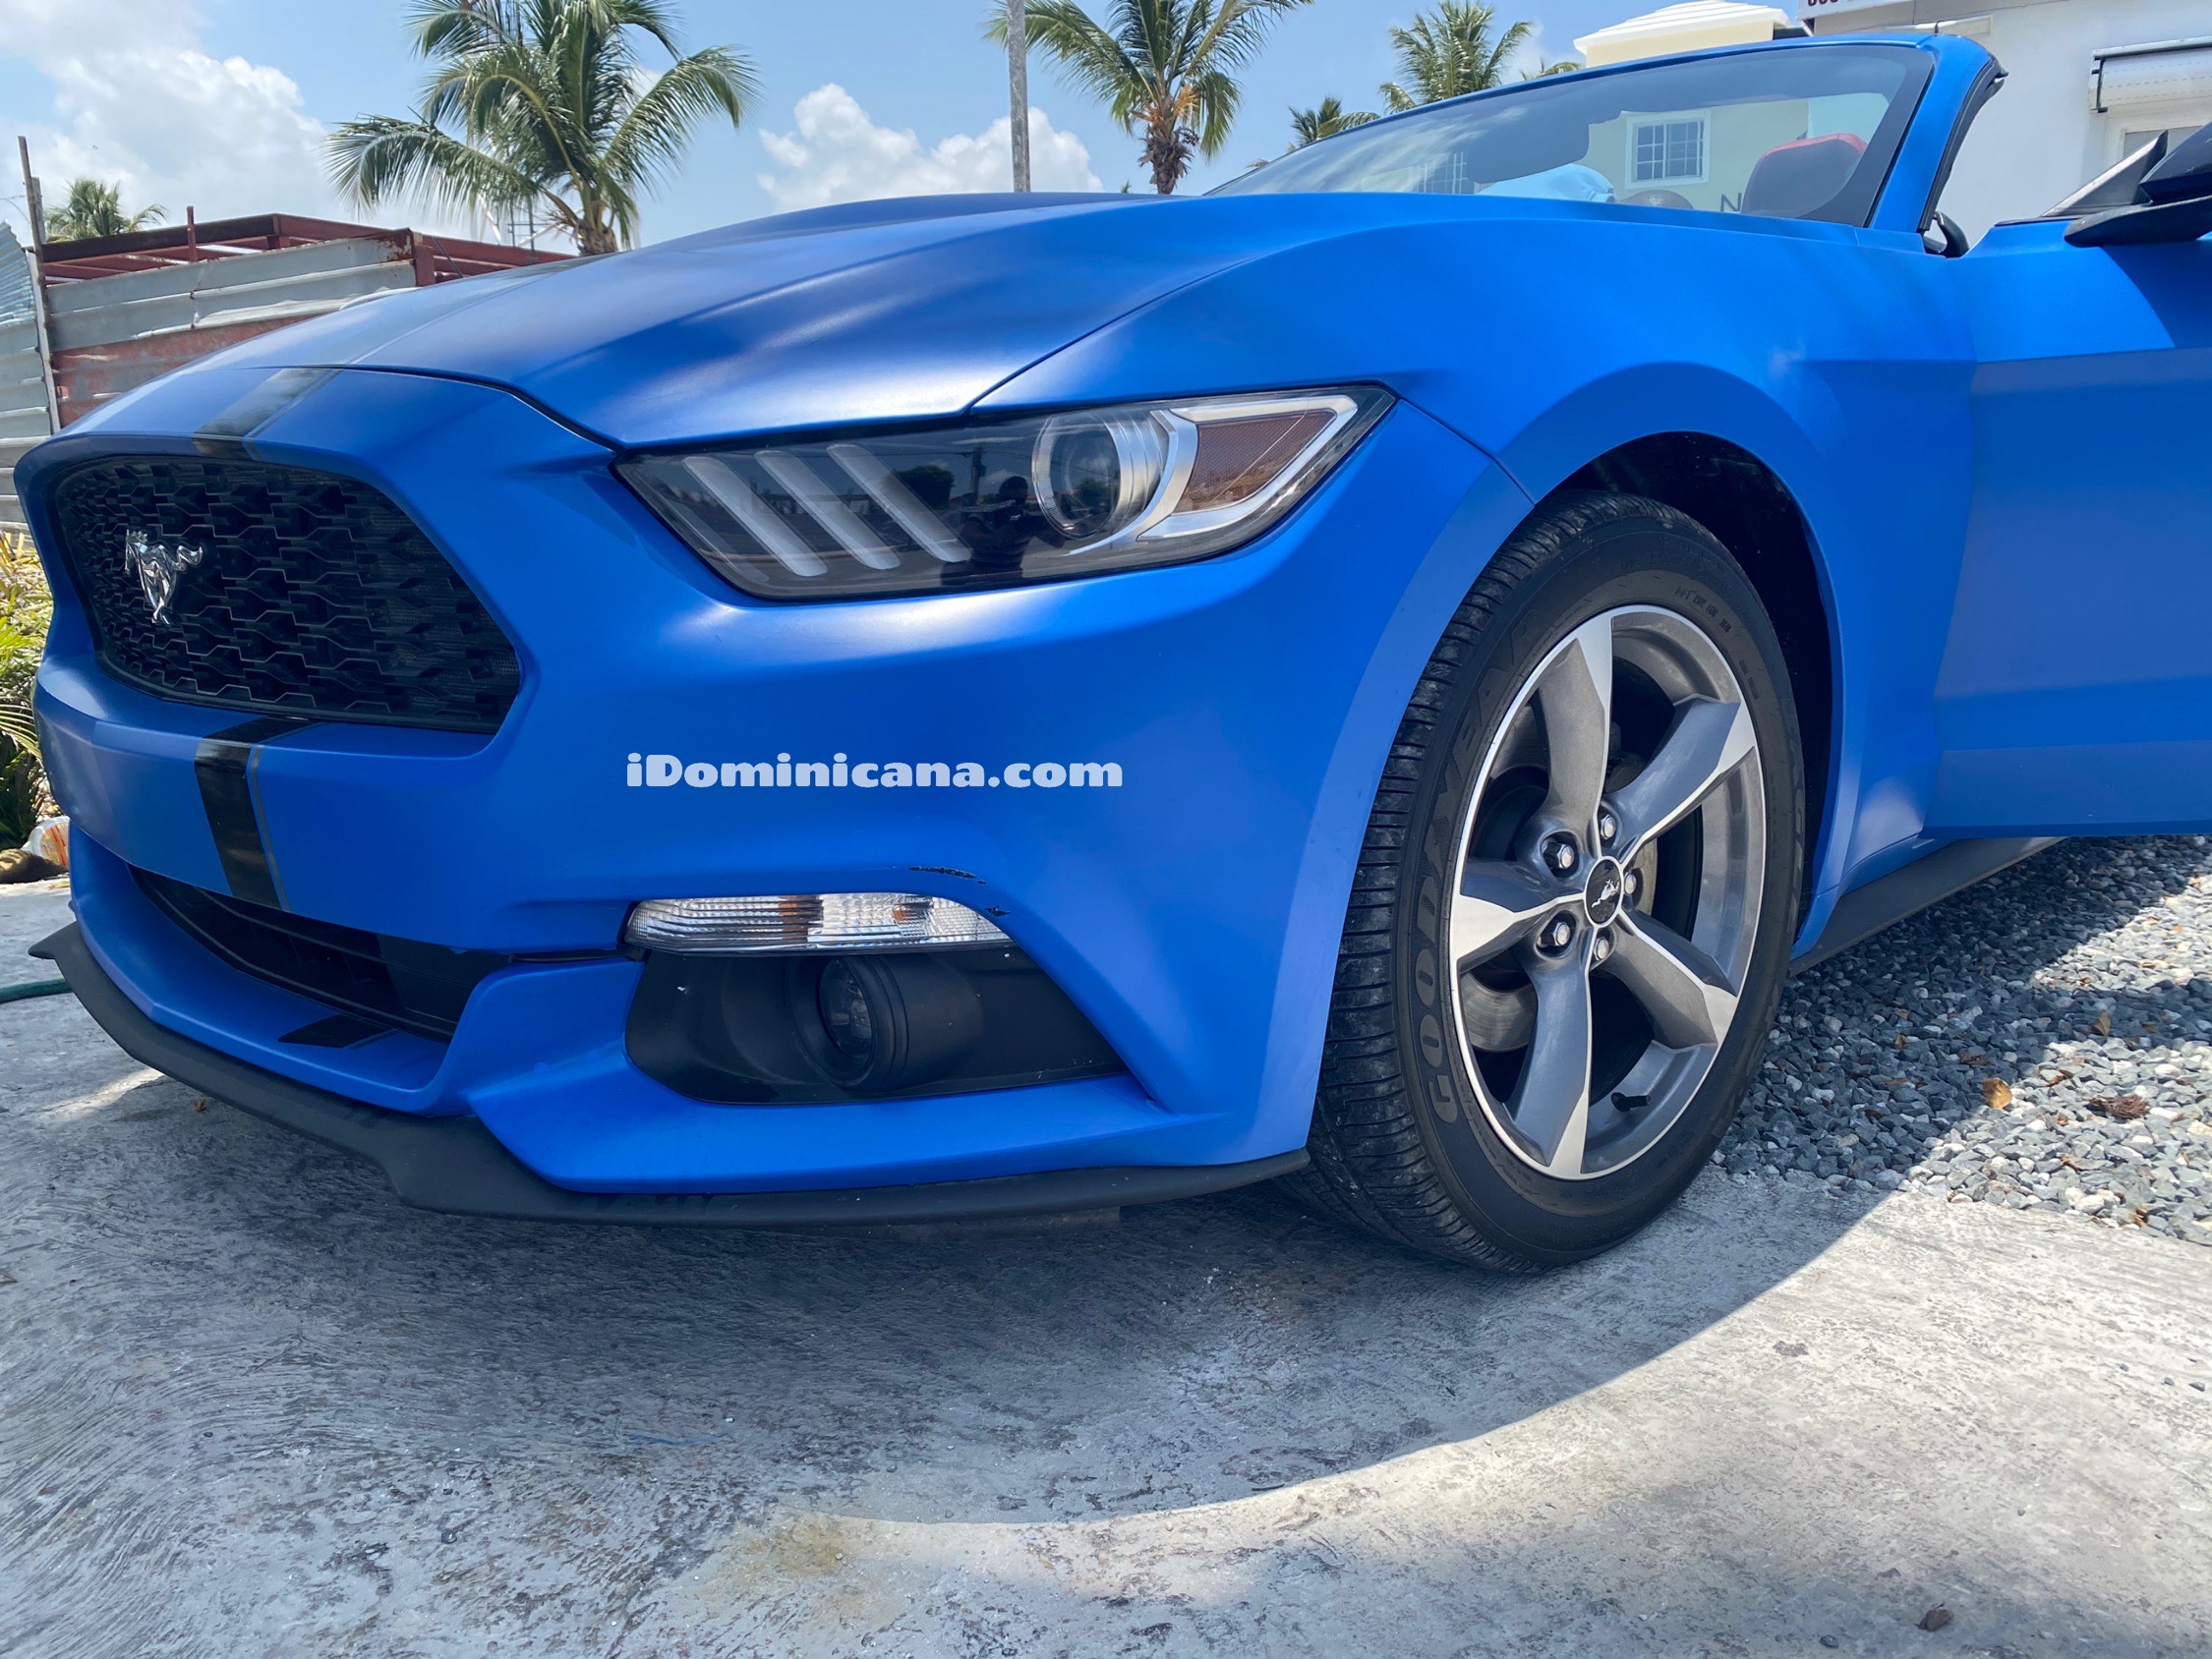 Авто Доминикана: синий кабриолет Ford Mustang (2016)